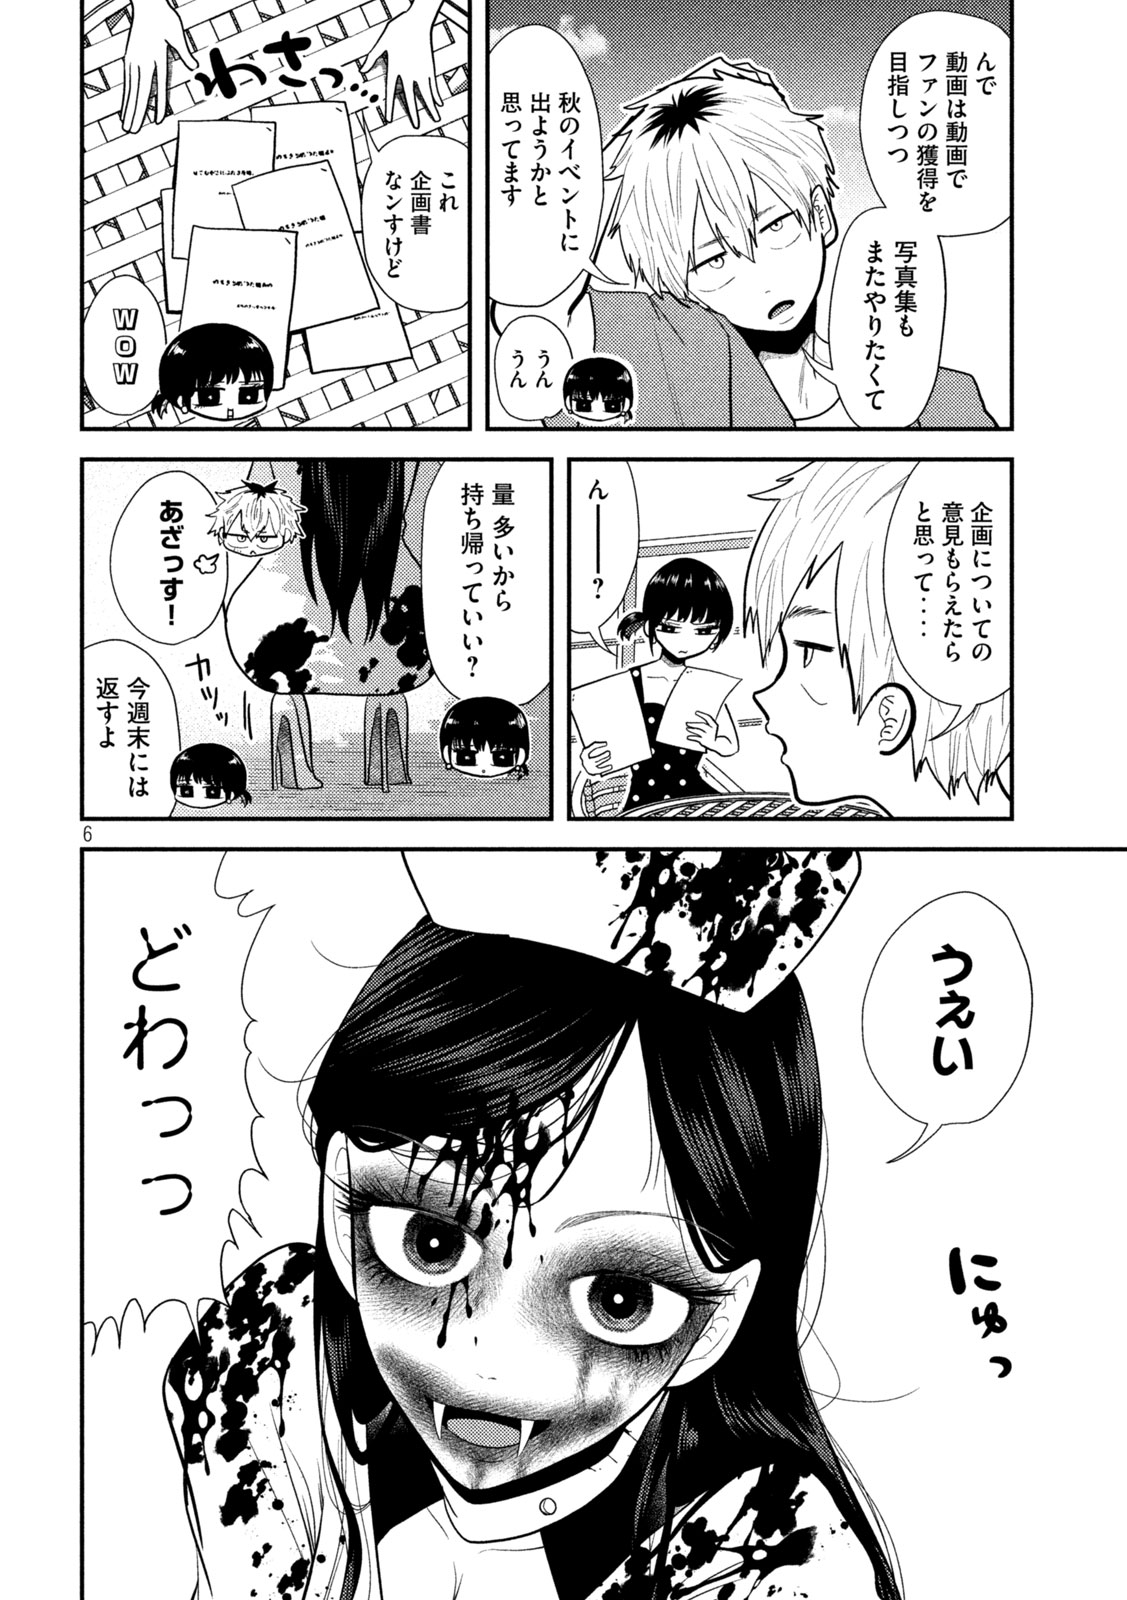 Heisei Haizanhei Sumire-chan - Chapter 22 - Page 6